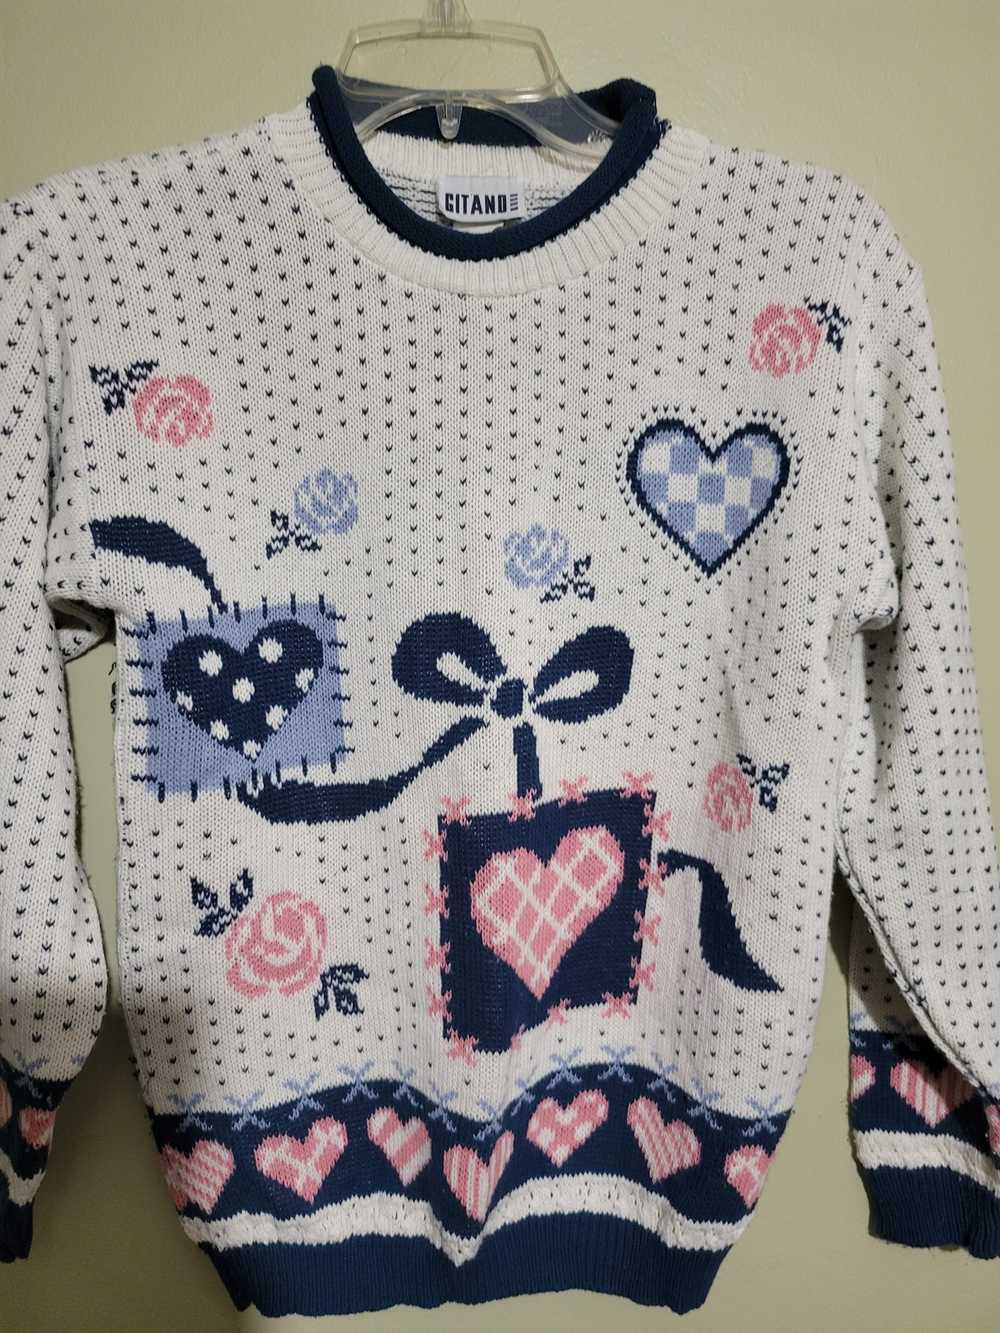 Other Gitano Vintage Sweater - image 1